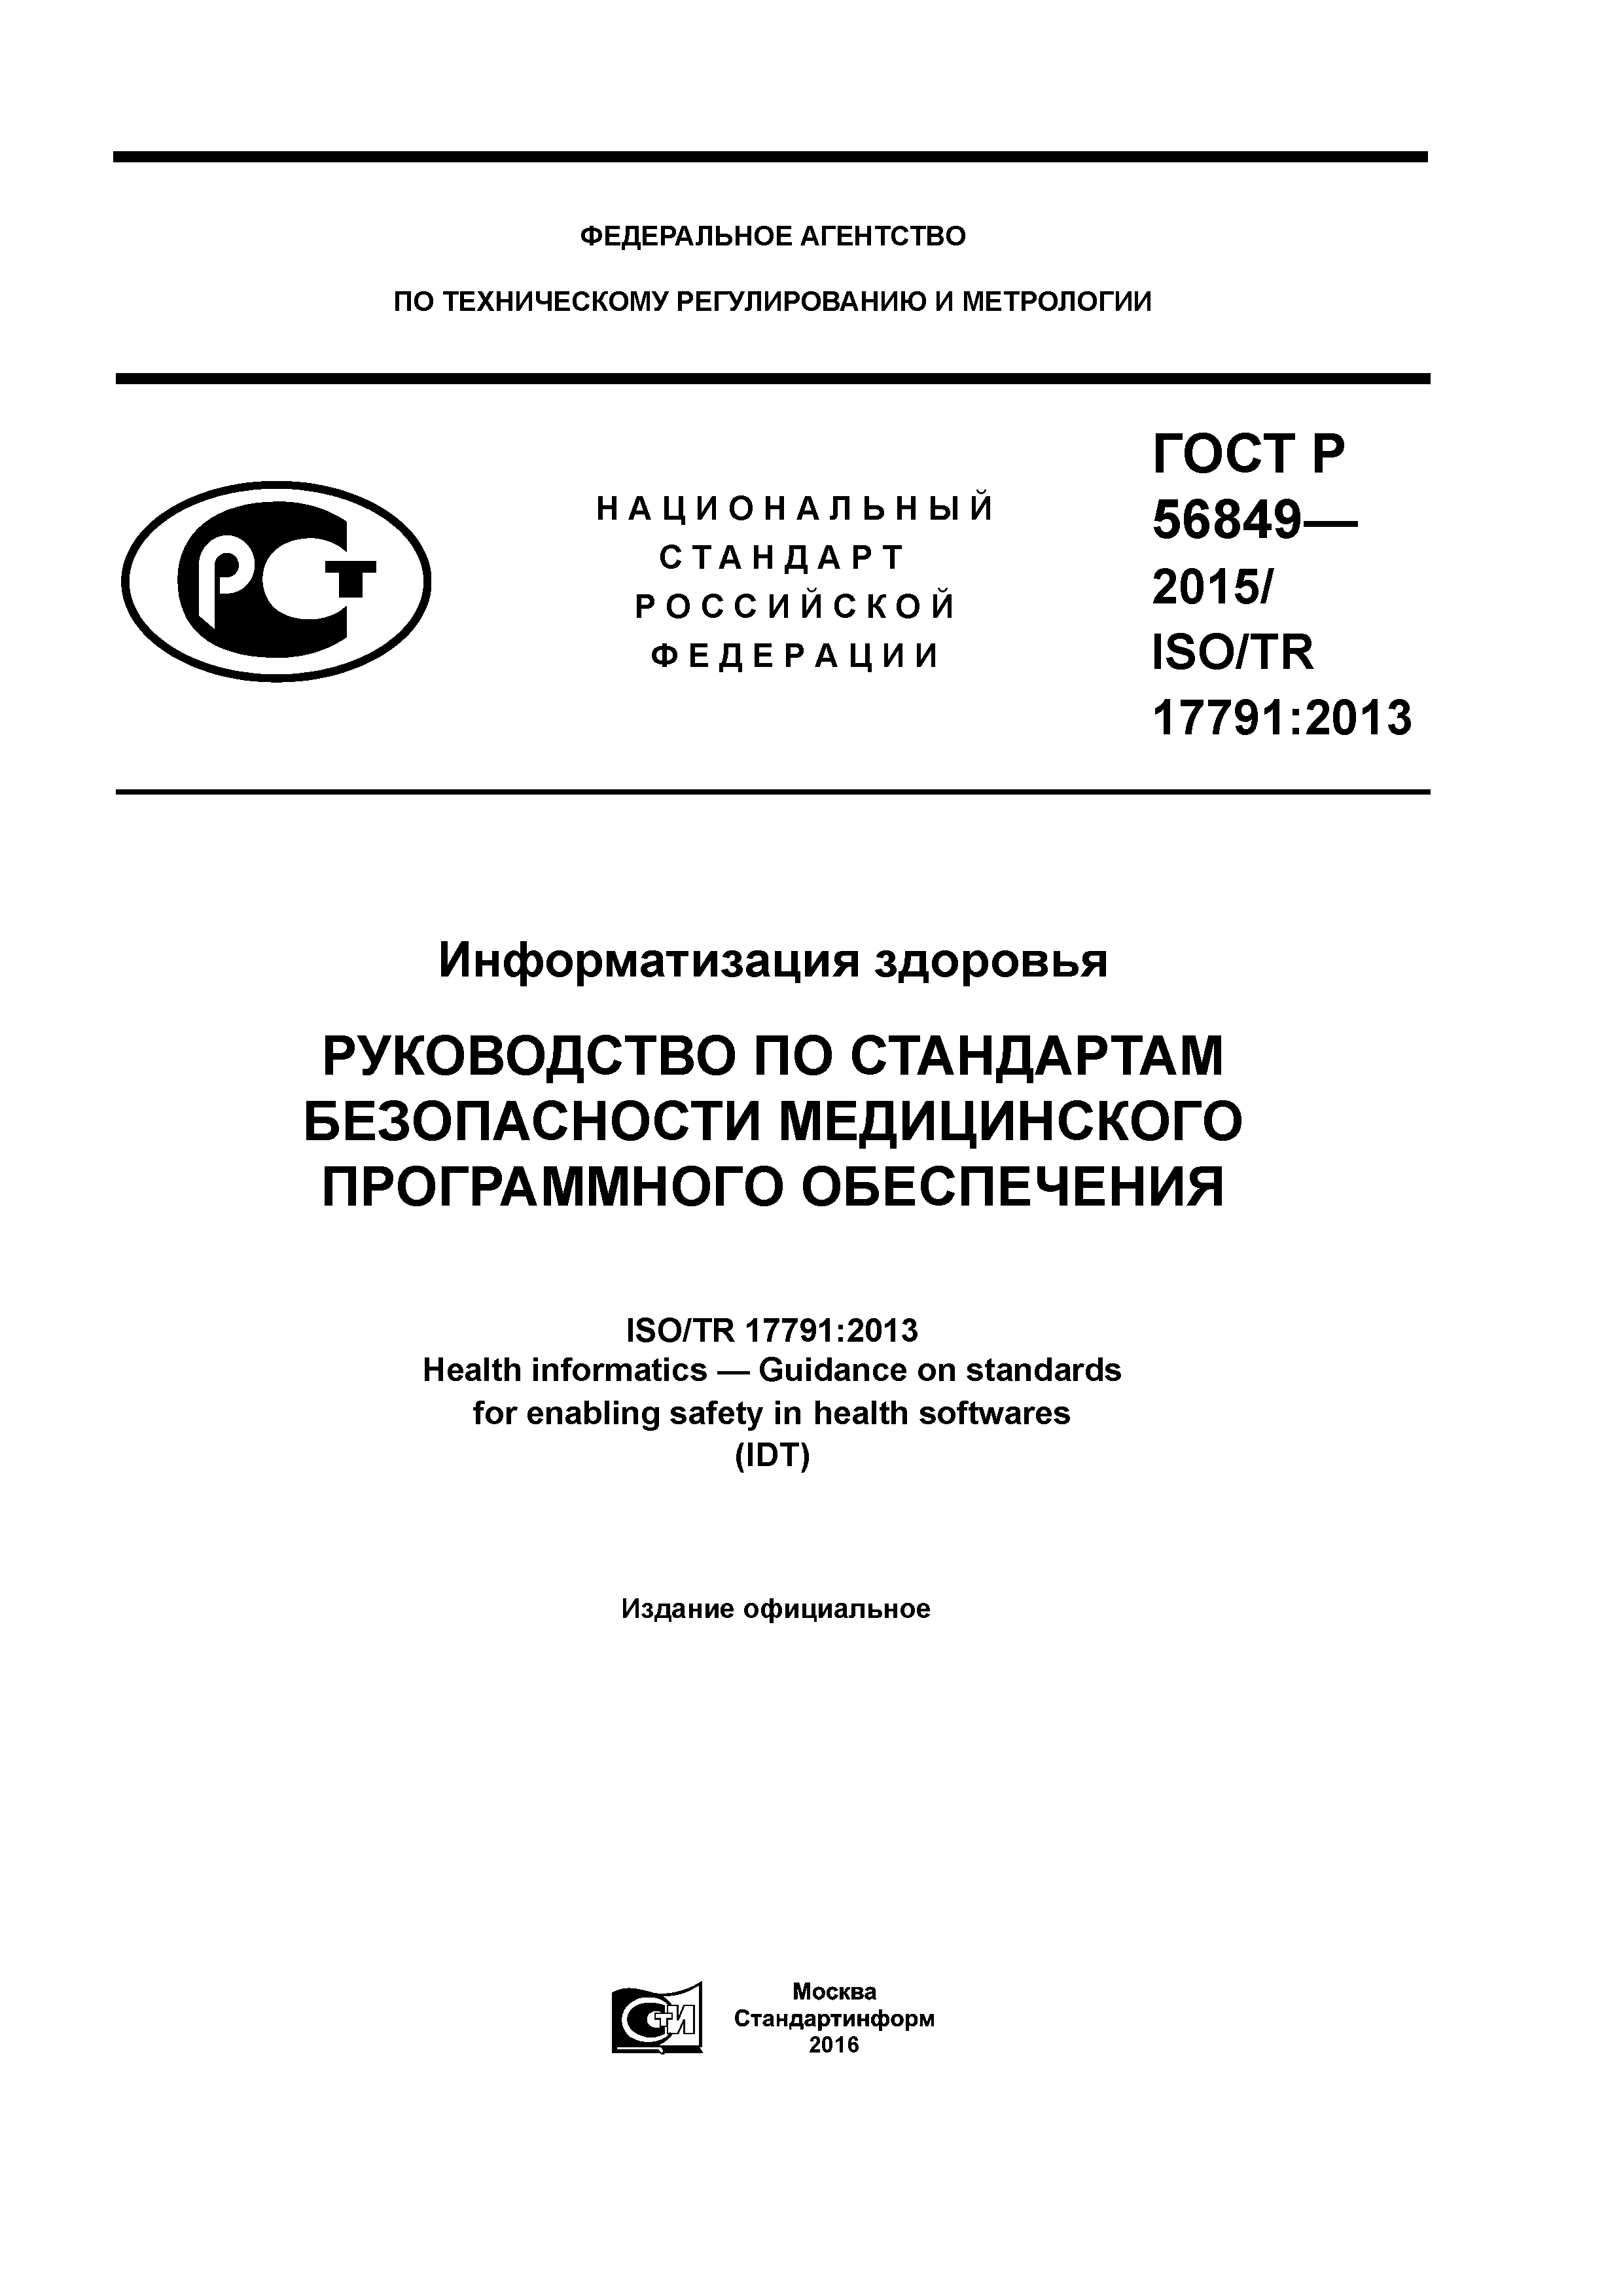 ГОСТ Р 56849-2015